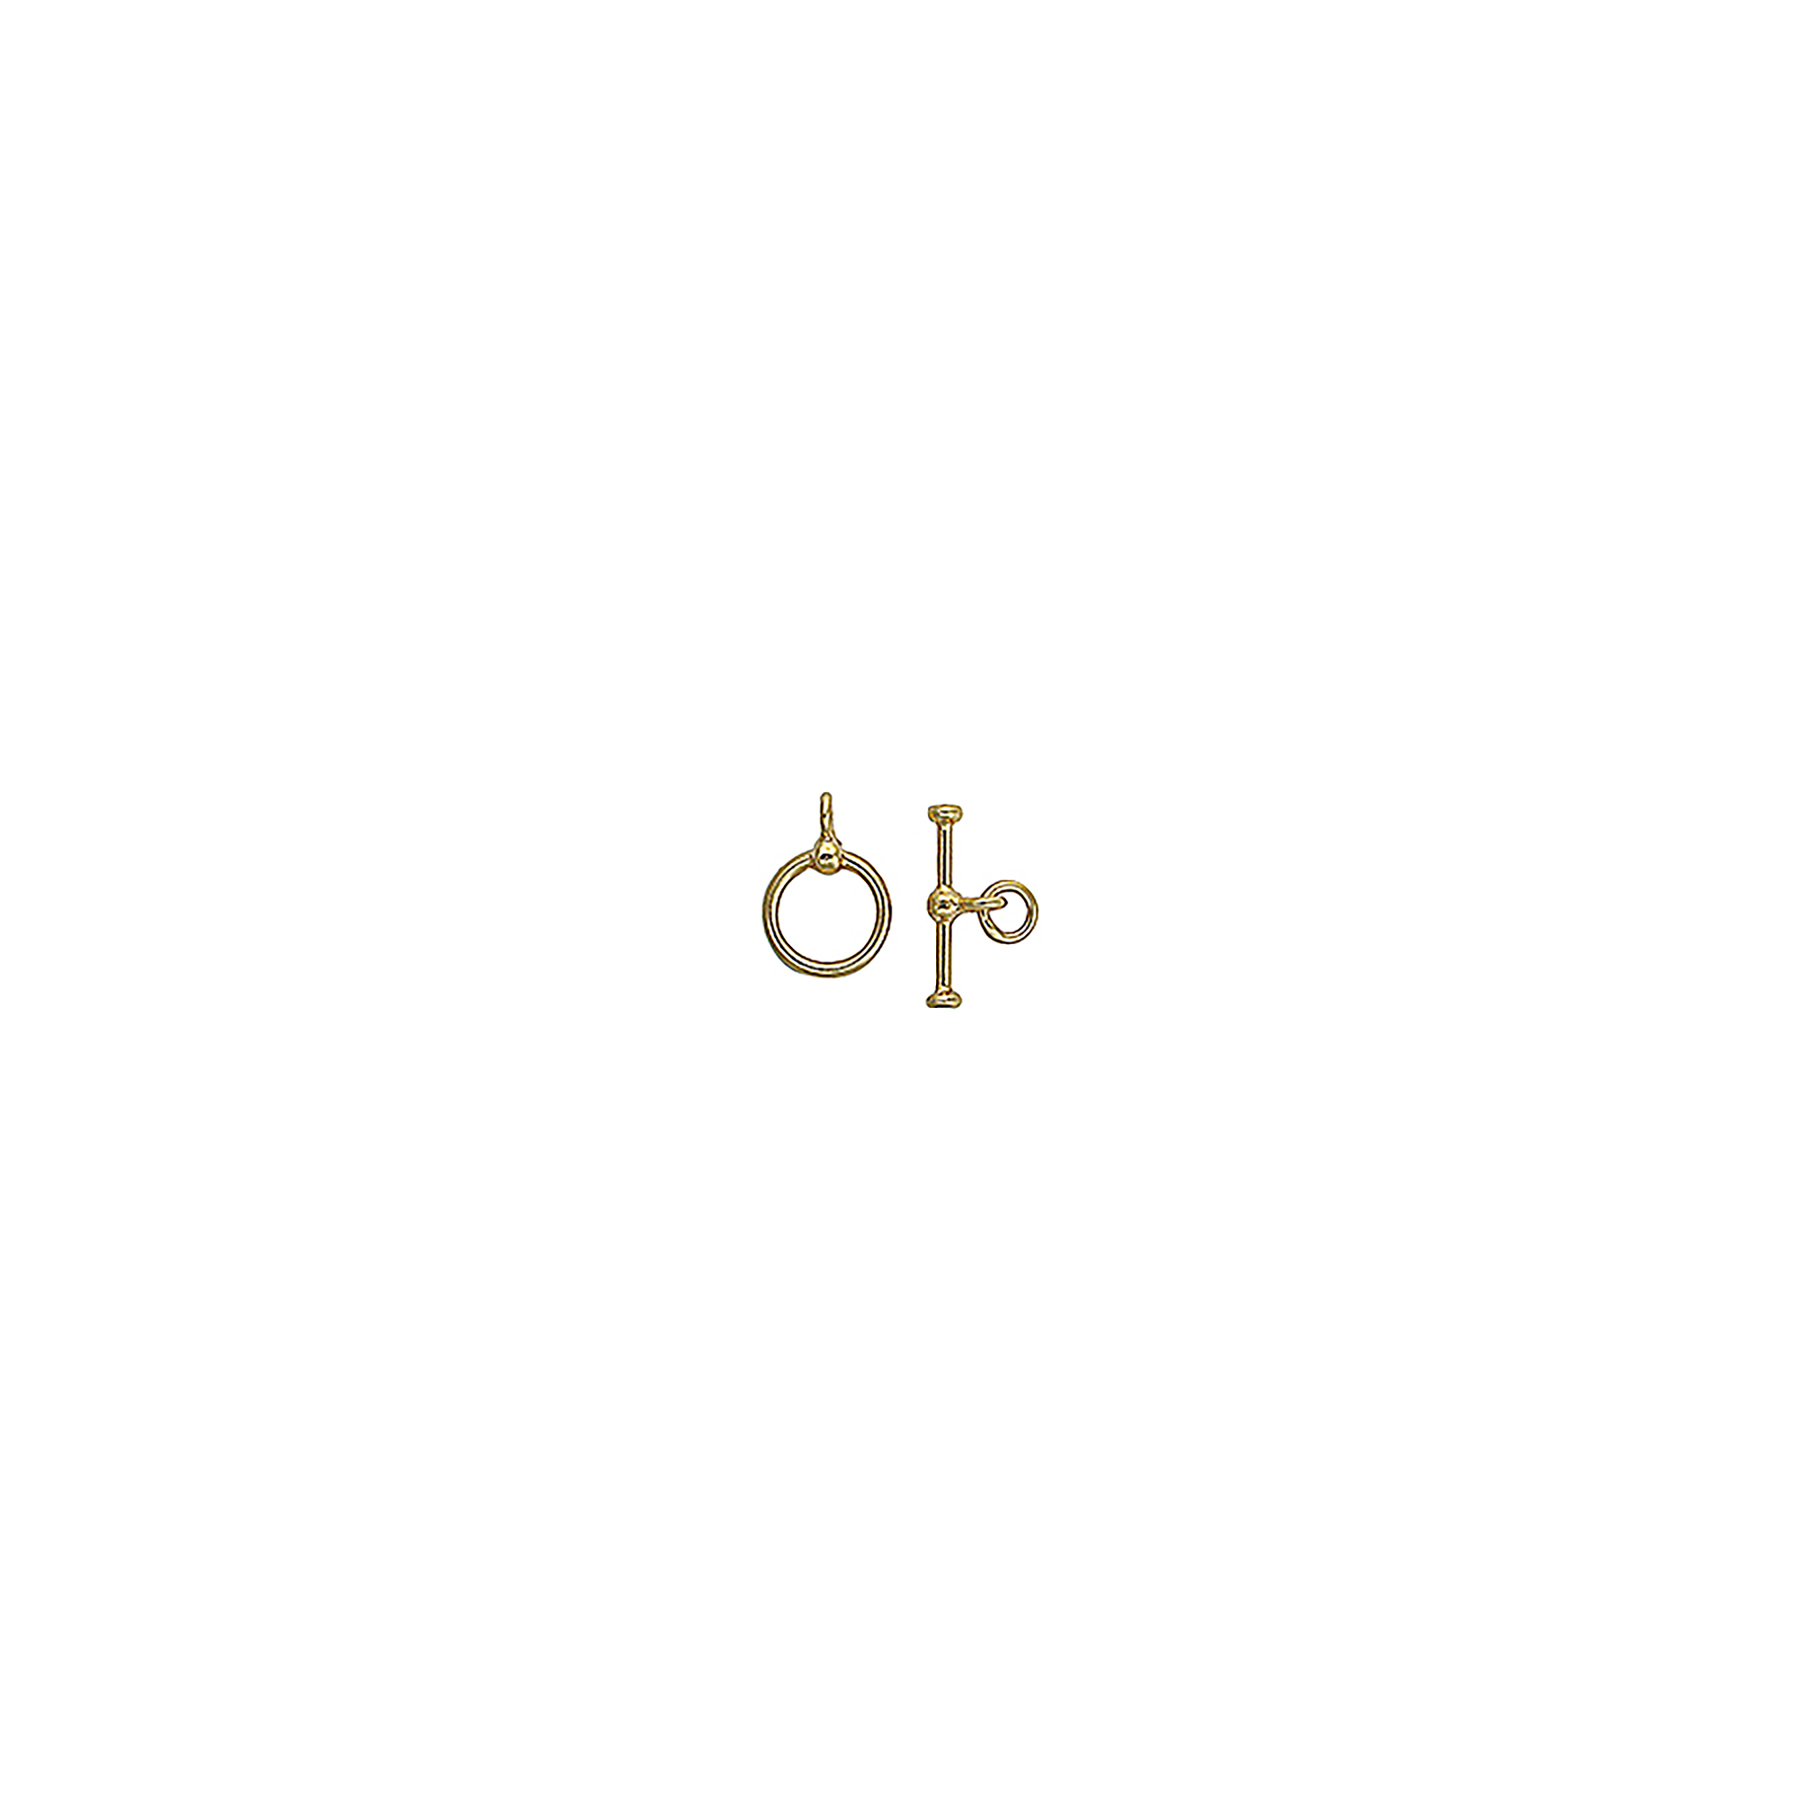 12mm Handmade Gold Vermeil Toggle Clasp - Santa Fe Jewelers Supply